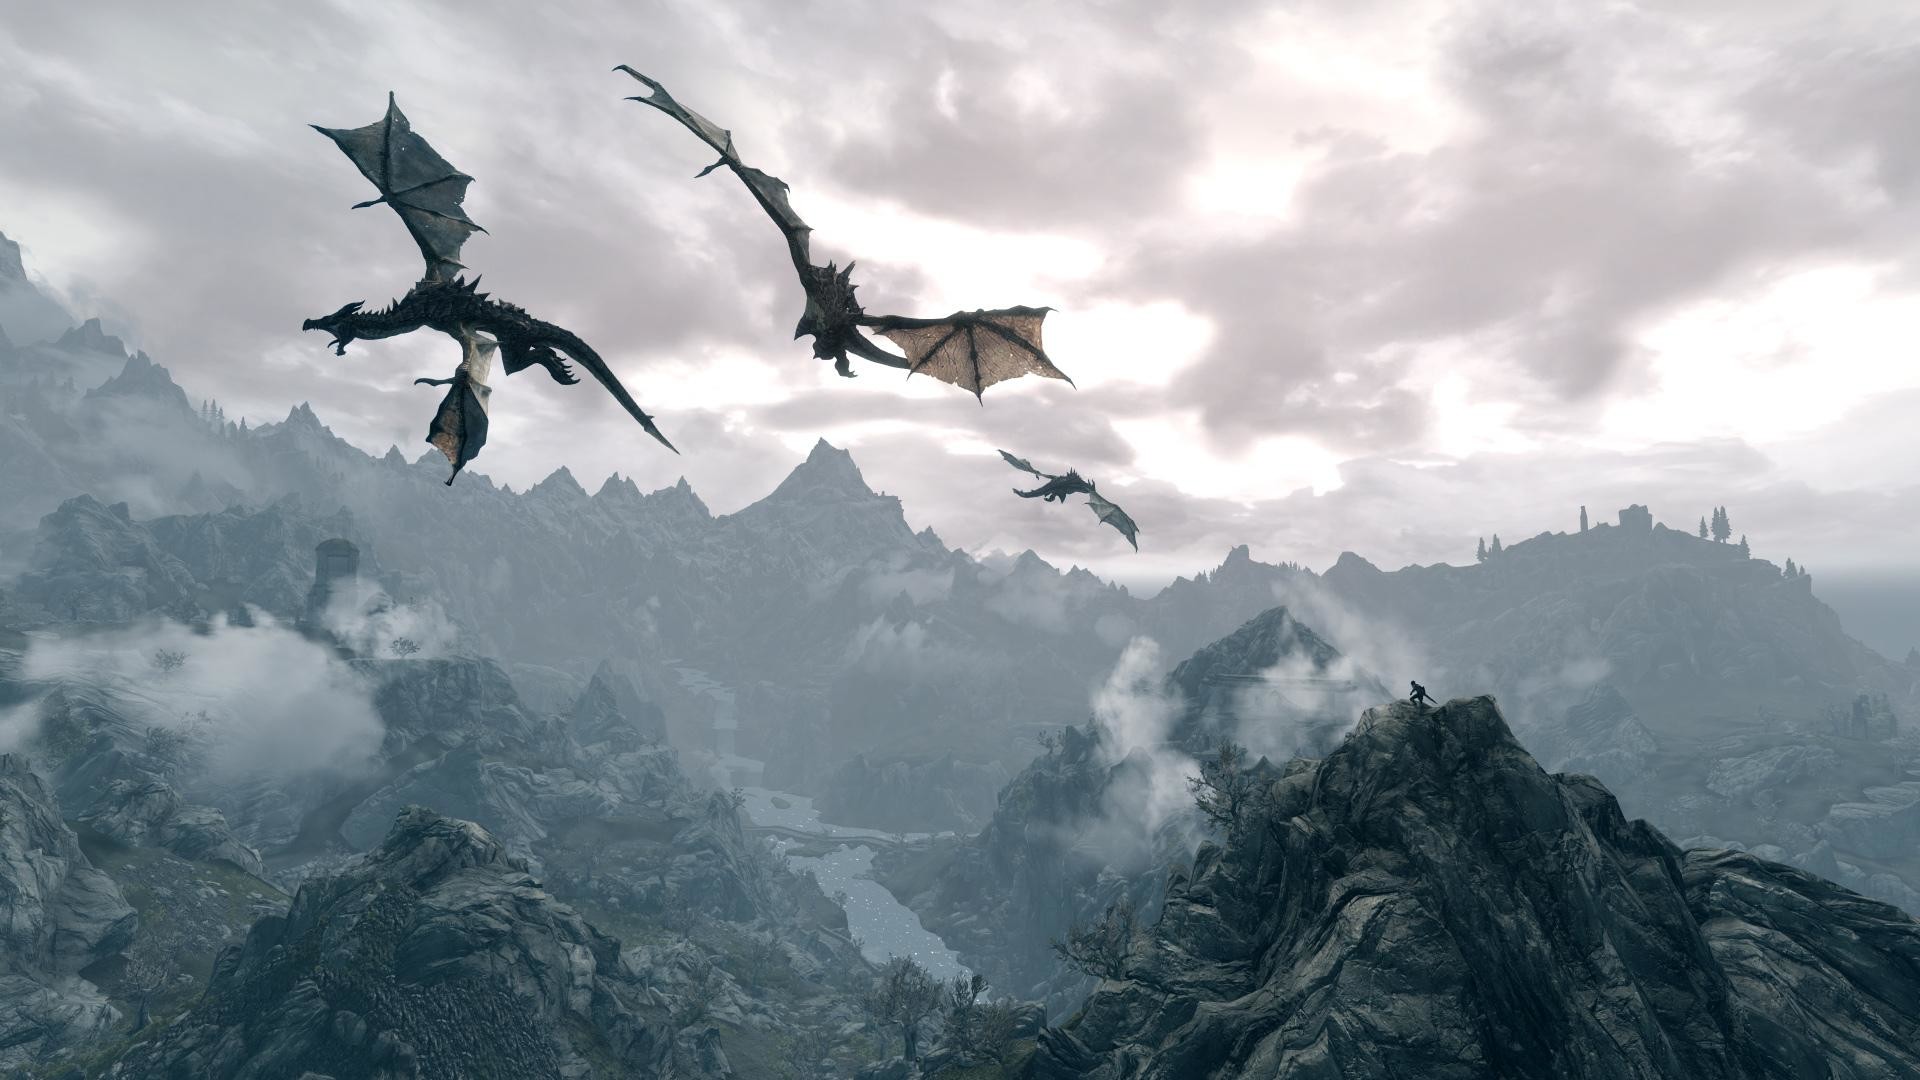 1920x1080 dragons flying skyrim - Google Search | Fantasy | Pinterest | Dragon skyrim  and Dragons